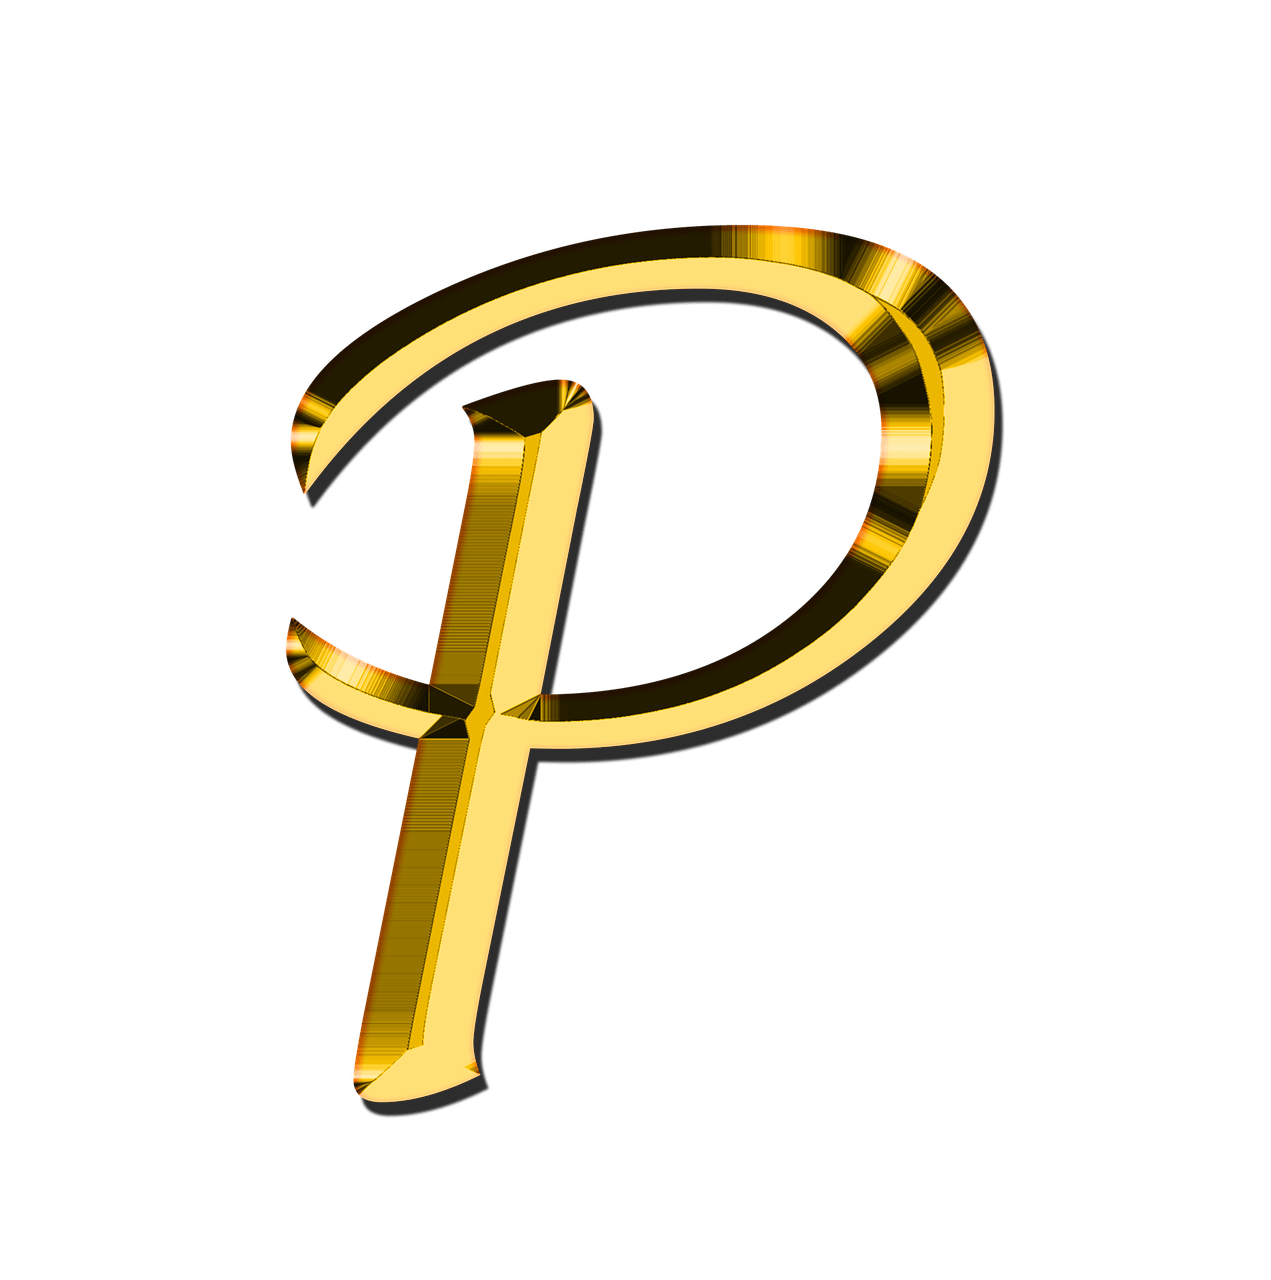 P letter PNG gambar latar belakang